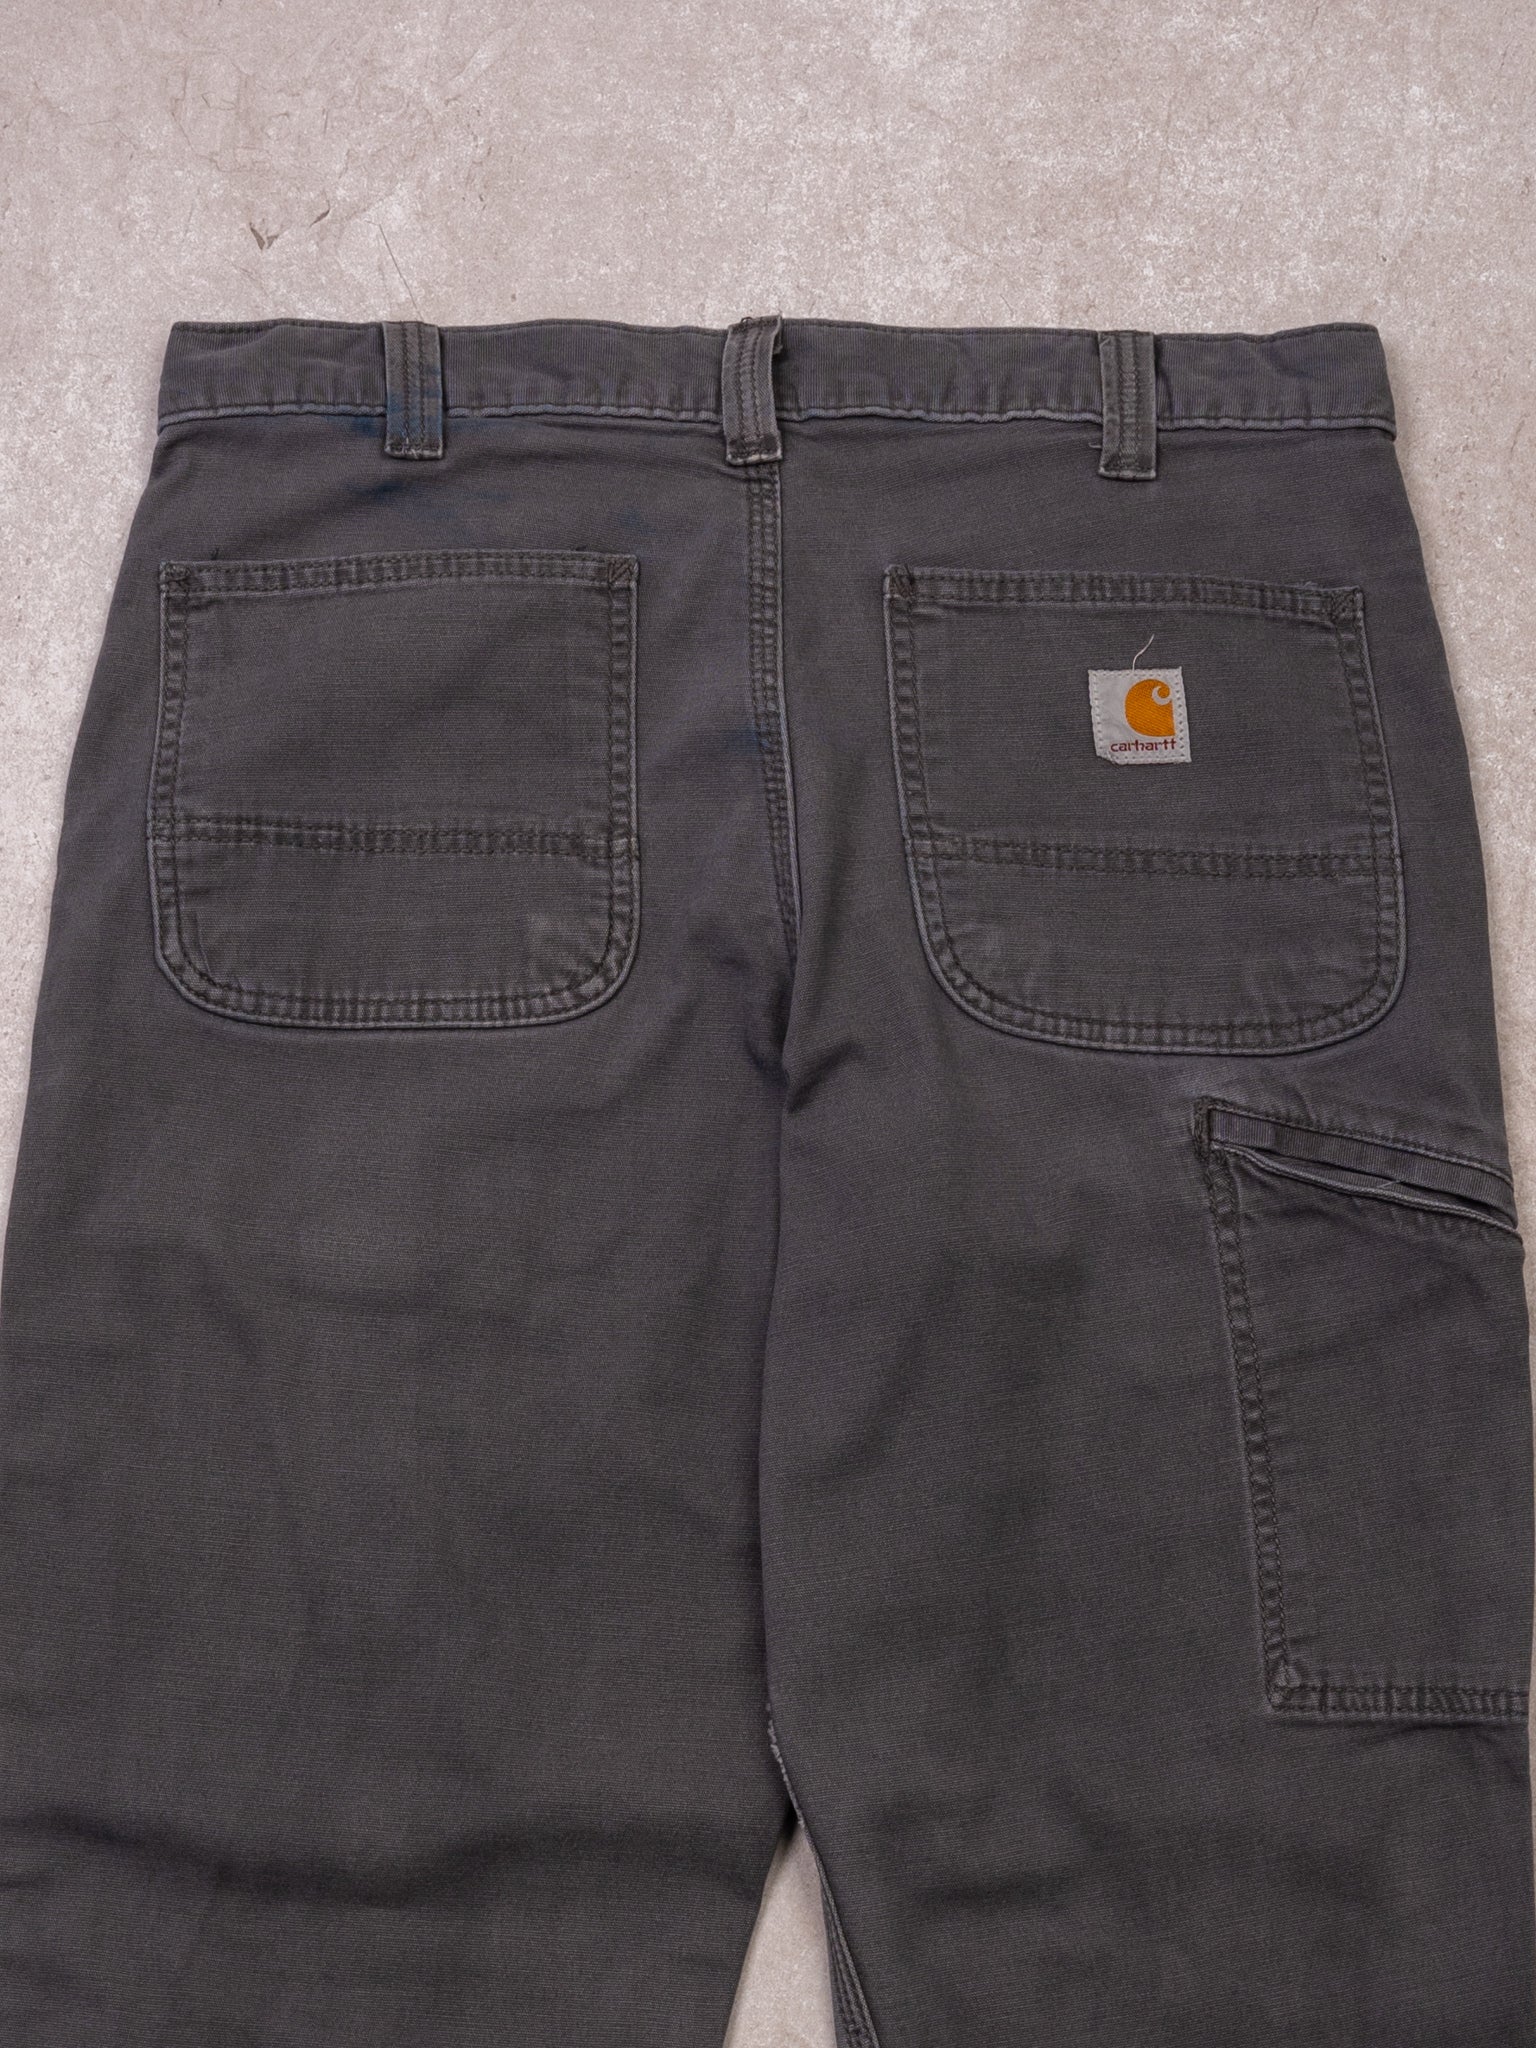 Vintage Y2K Grey Cahartt Relax Fit Cargo Pants (32 x 30)